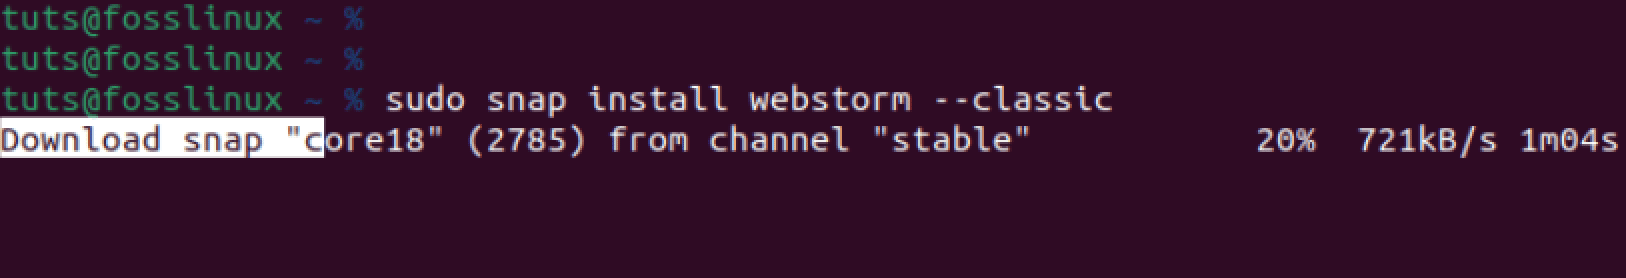 install webstorm